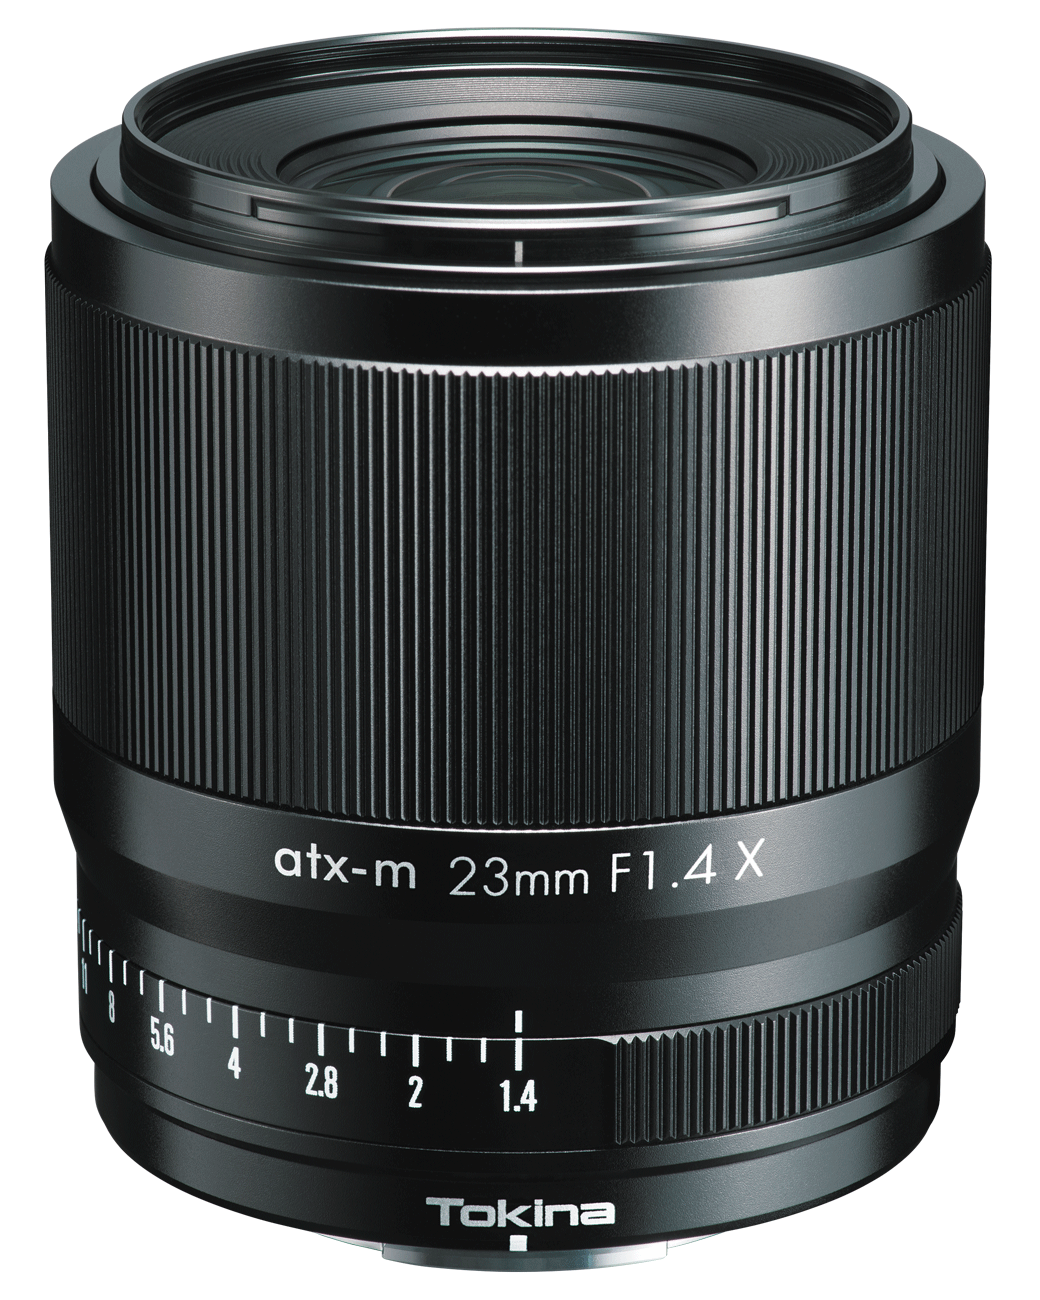 Tokina 23mm F 1.4 X lens for Fuji